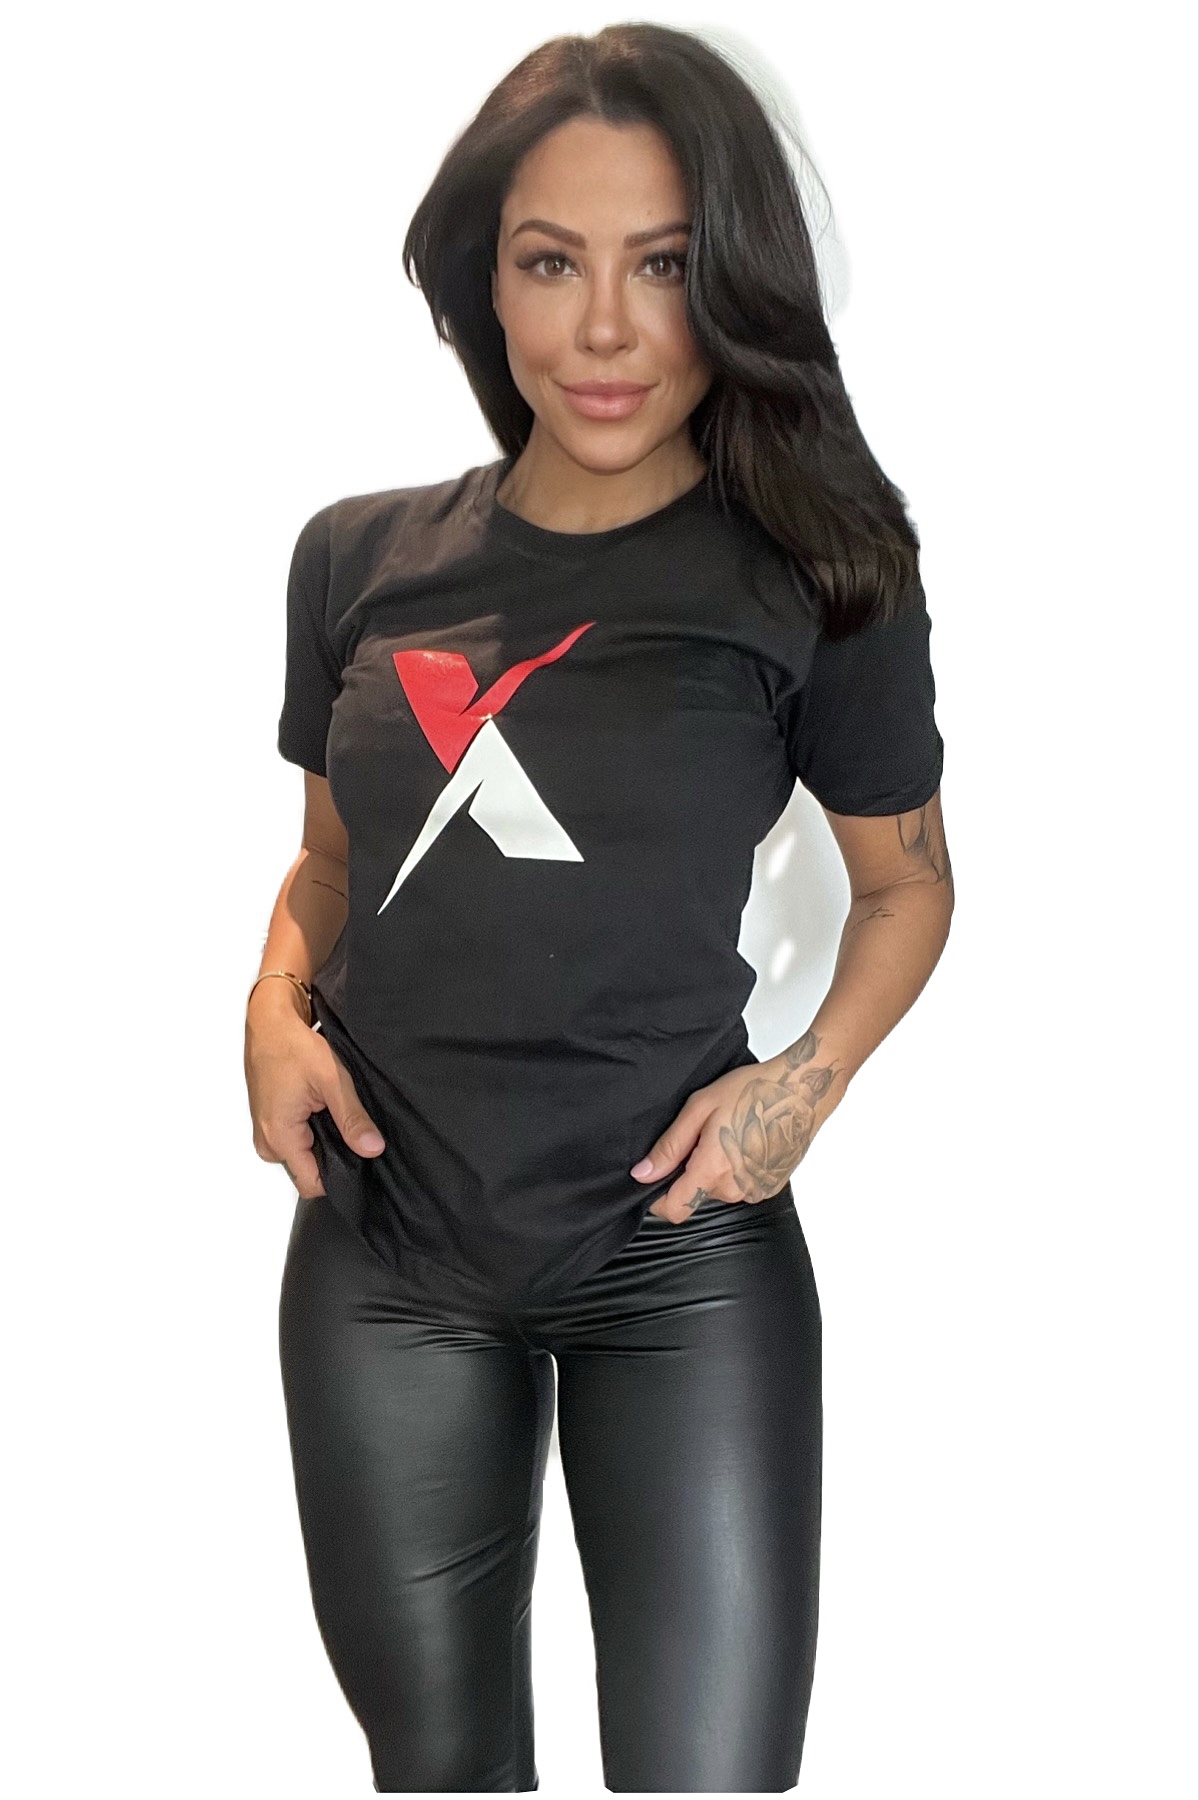 Body Power Store Women  X Shirt 